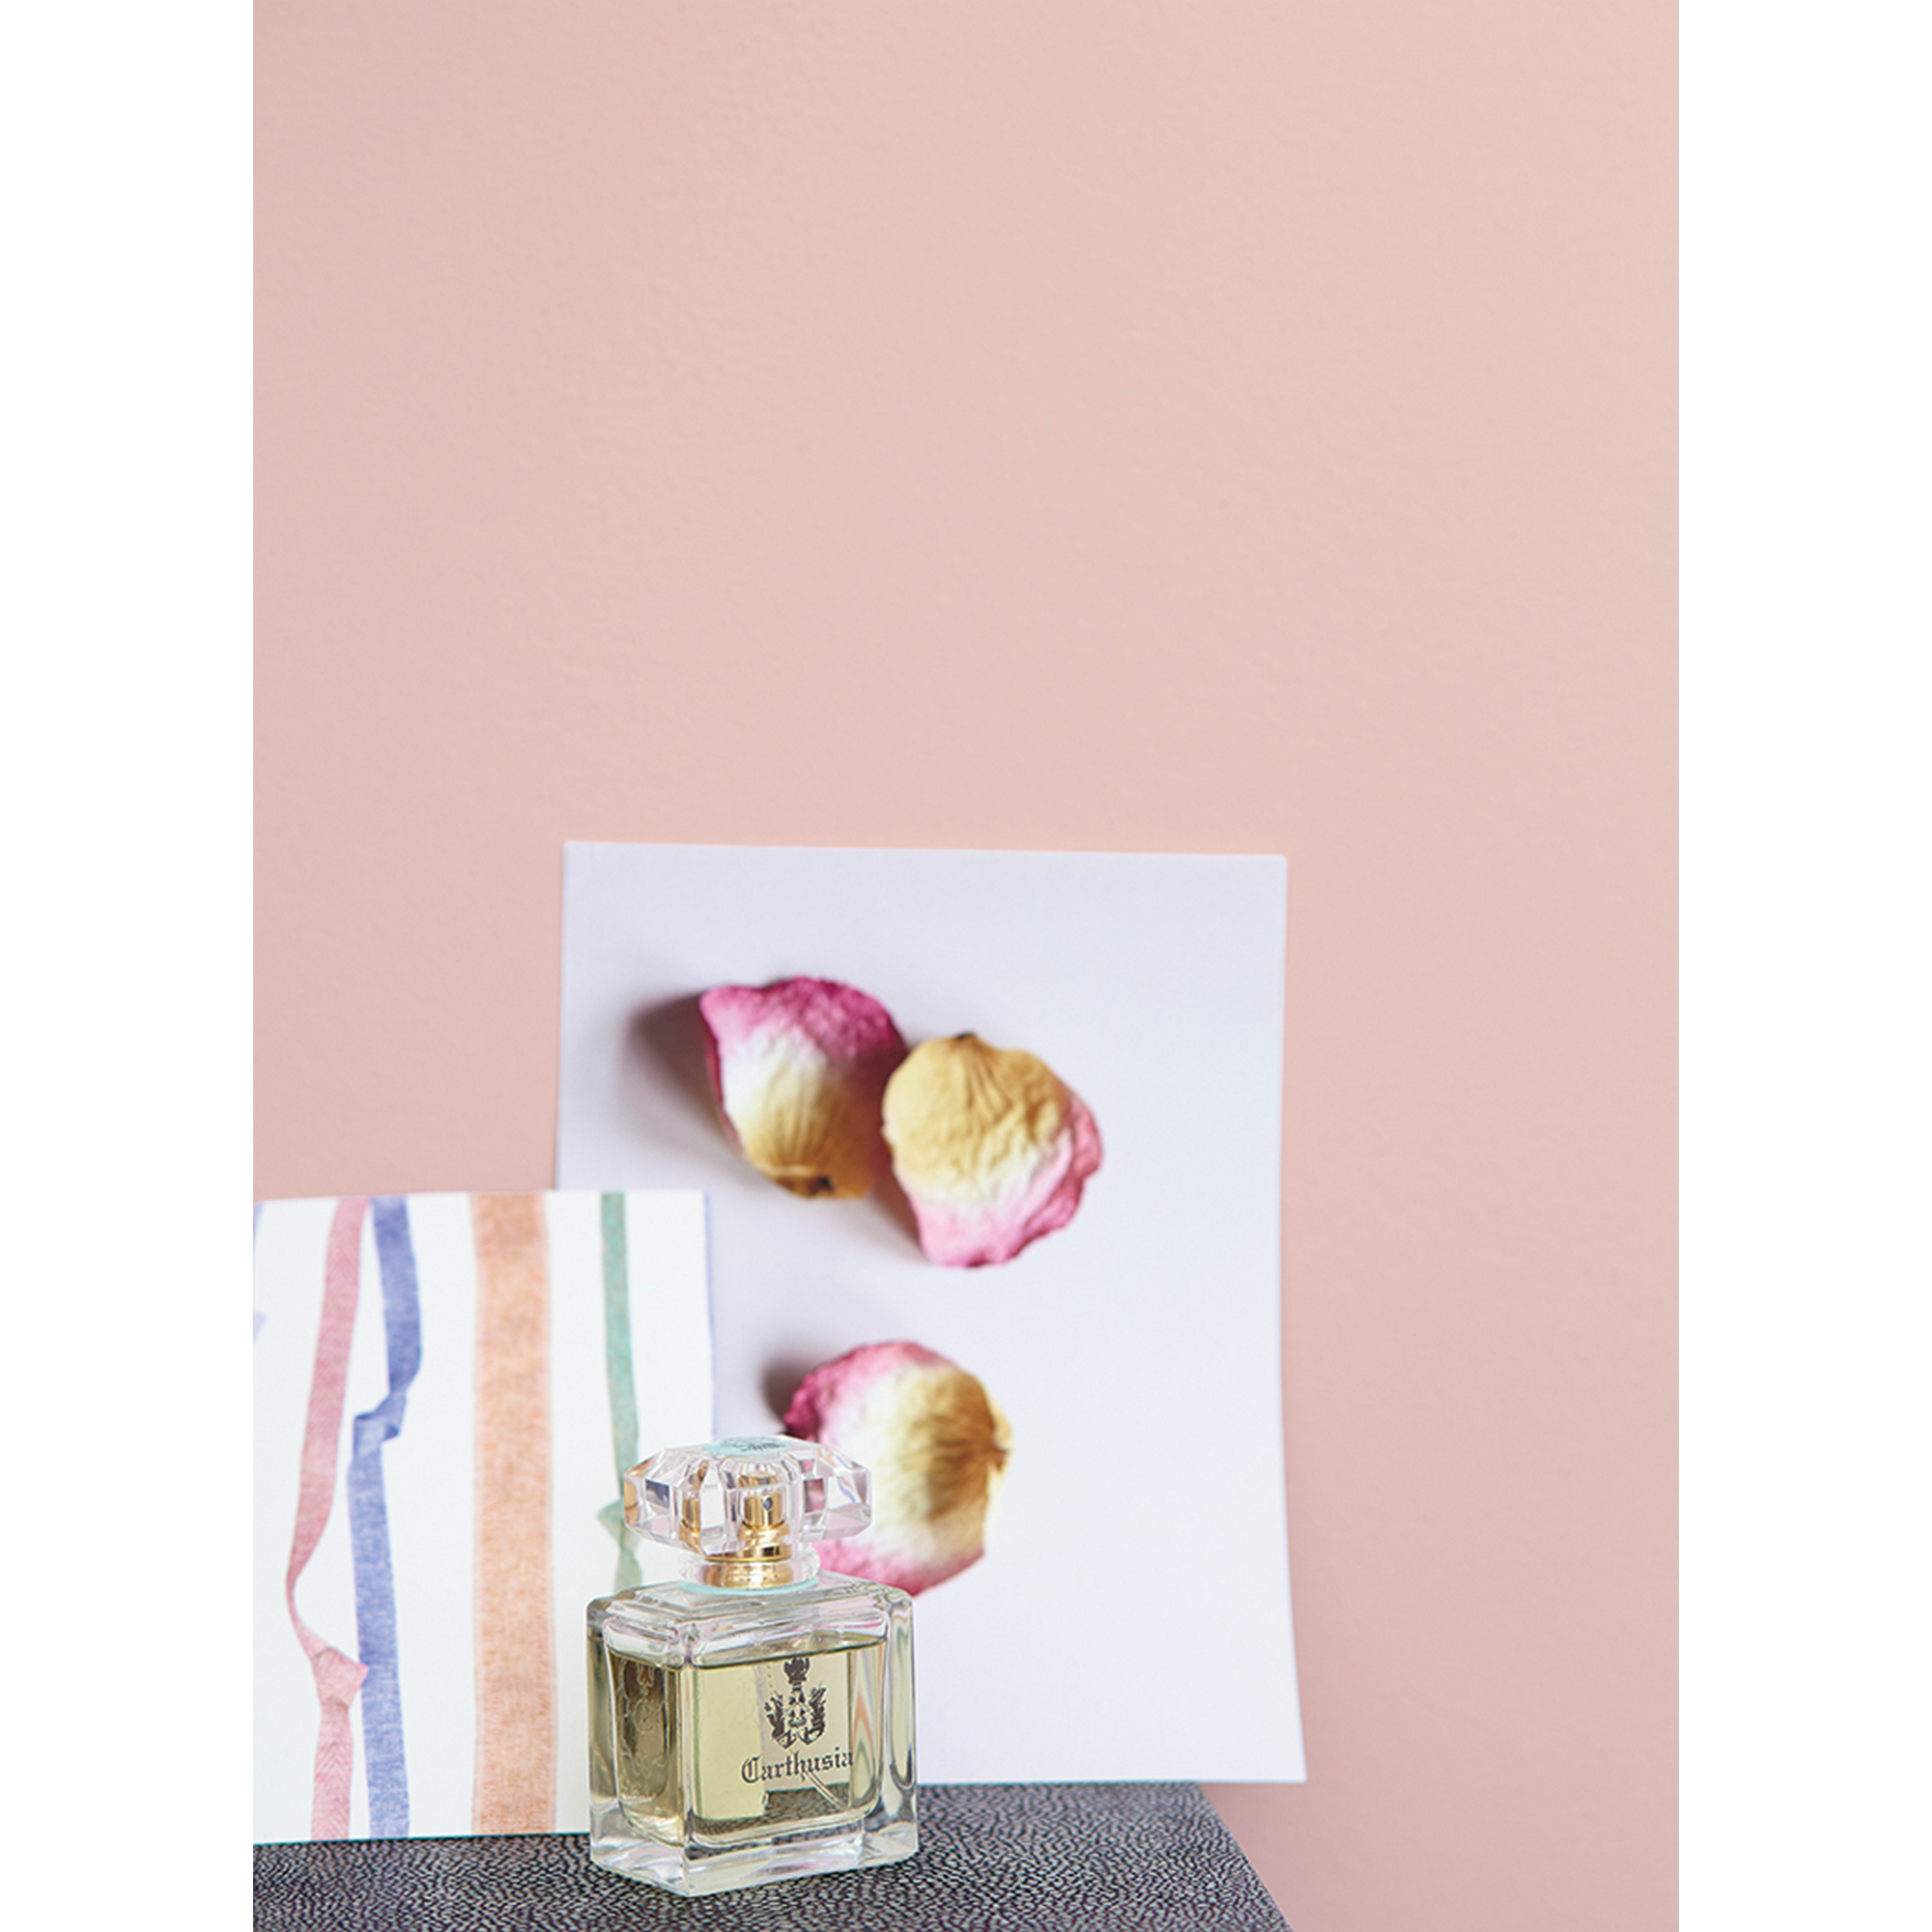 Feine Farben 'Wolken in Rosé' hellrosa matt 2,5 l + product picture